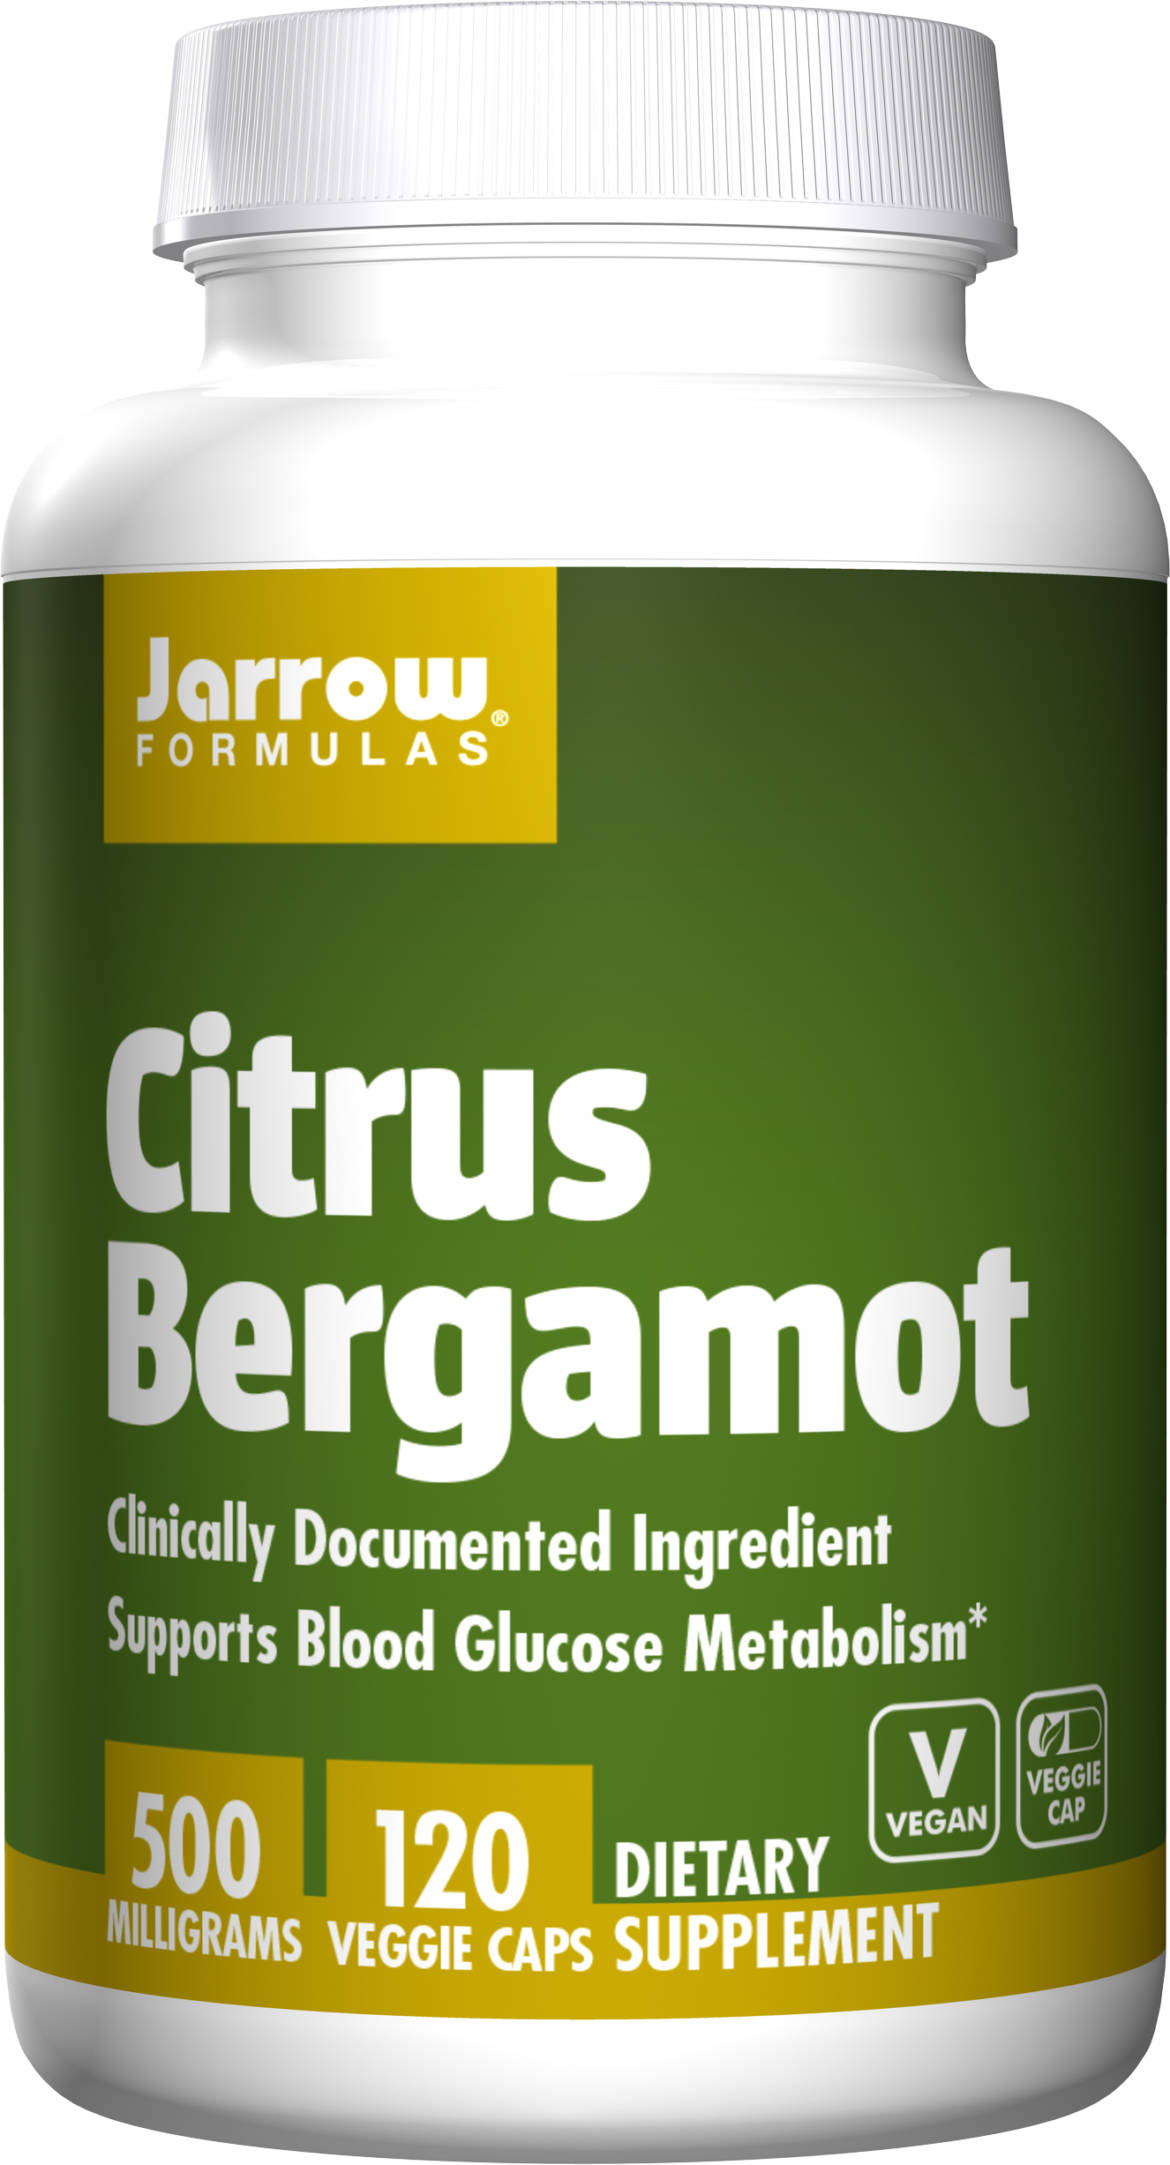 Jarrow-Citrus-Bergamot.jpg